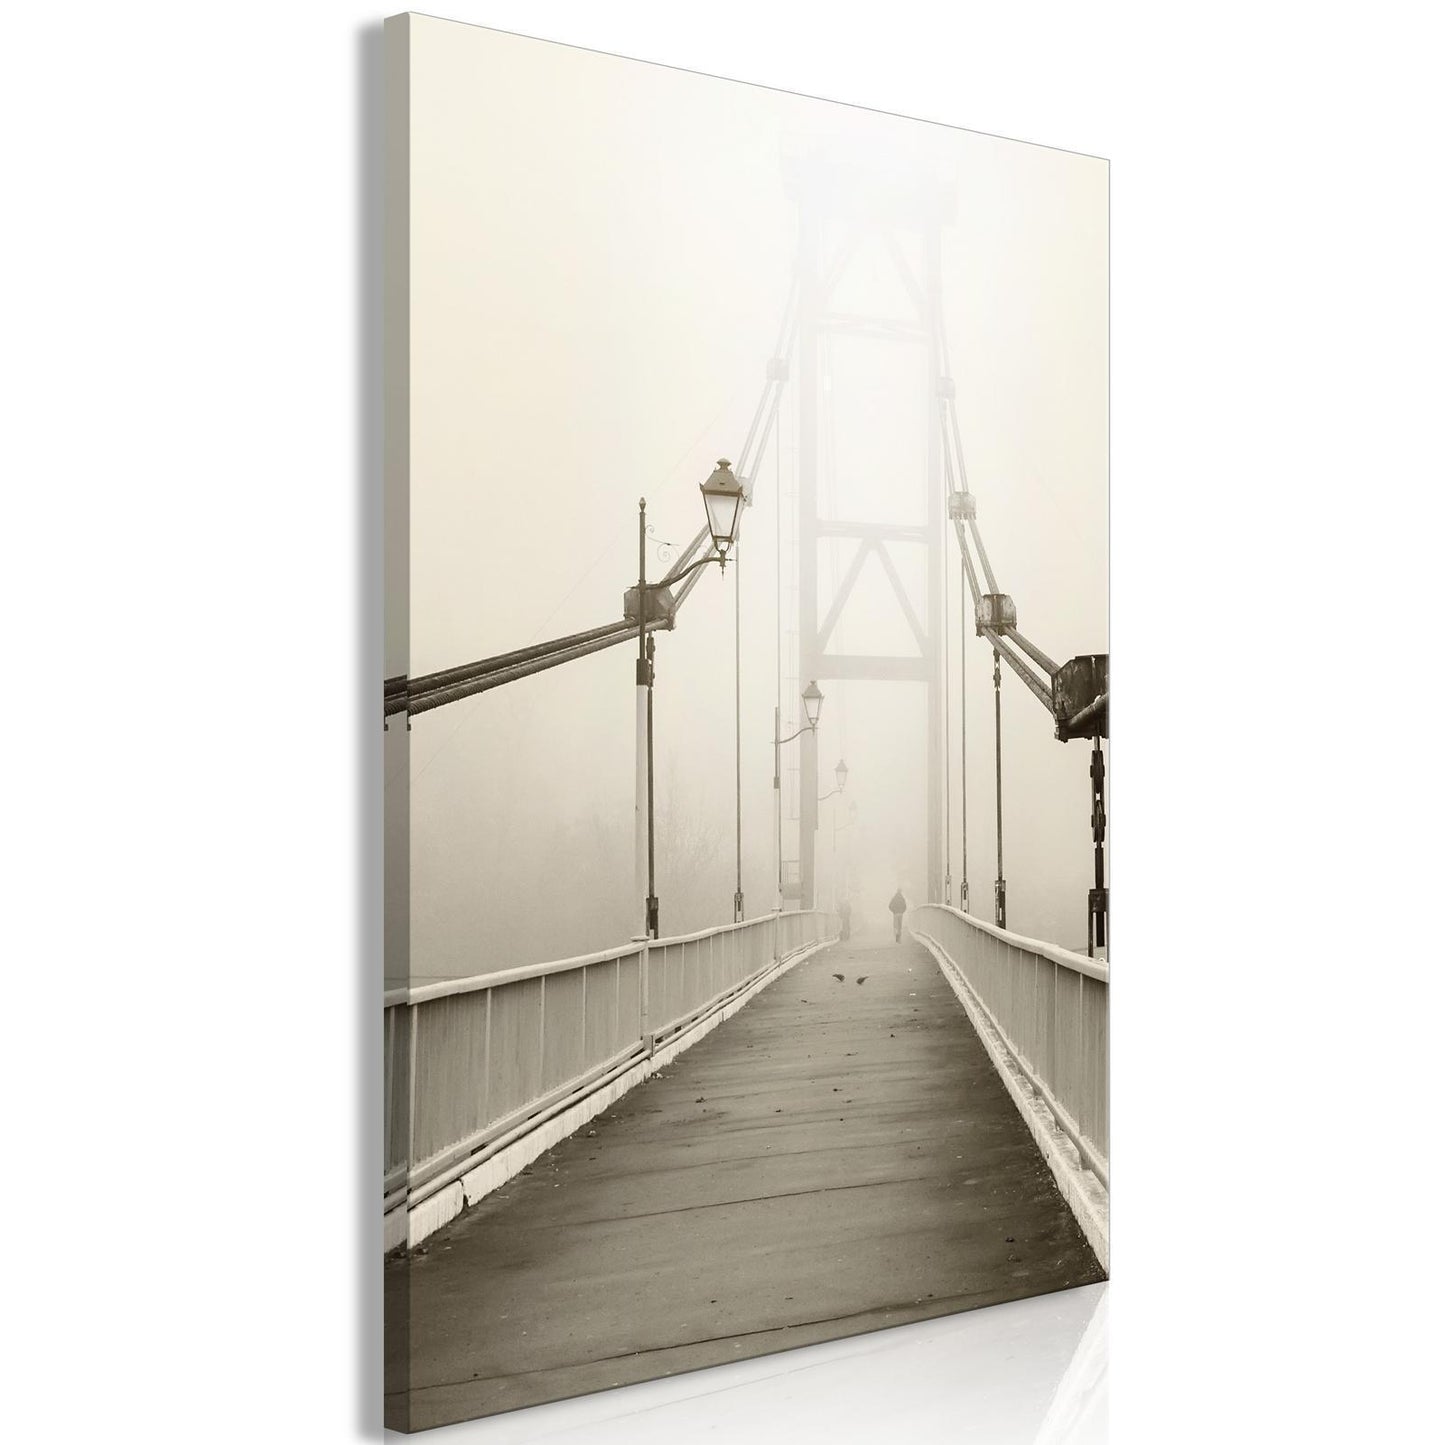 Canvas Print - Bridge in the Fog (1 Part) Vertical